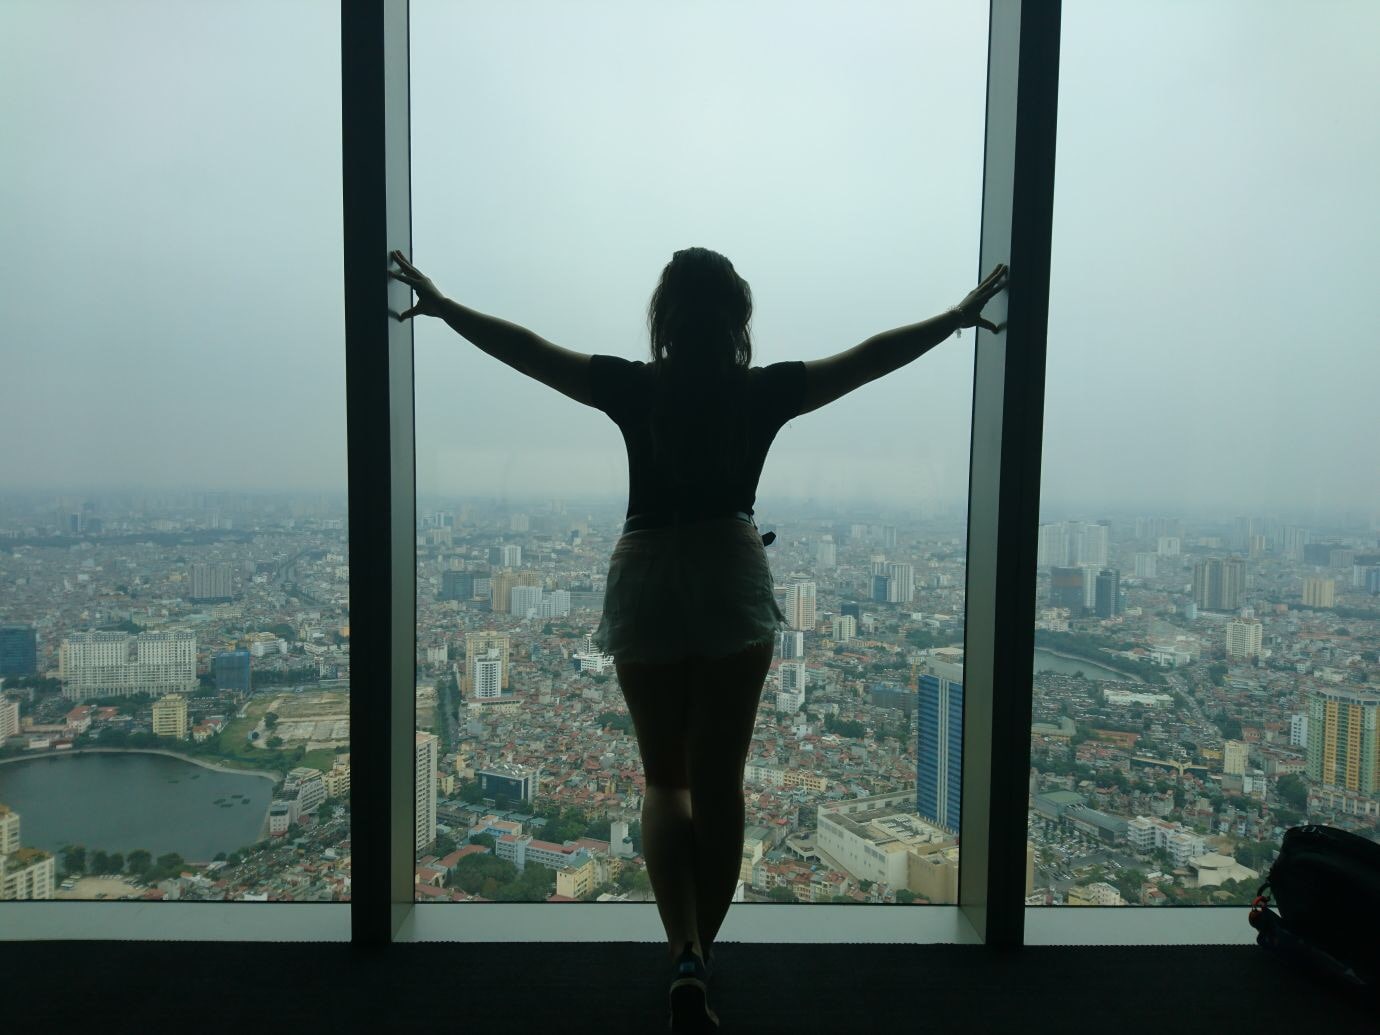 Lotte Tower Observation Deck in Hanoi Vietnam